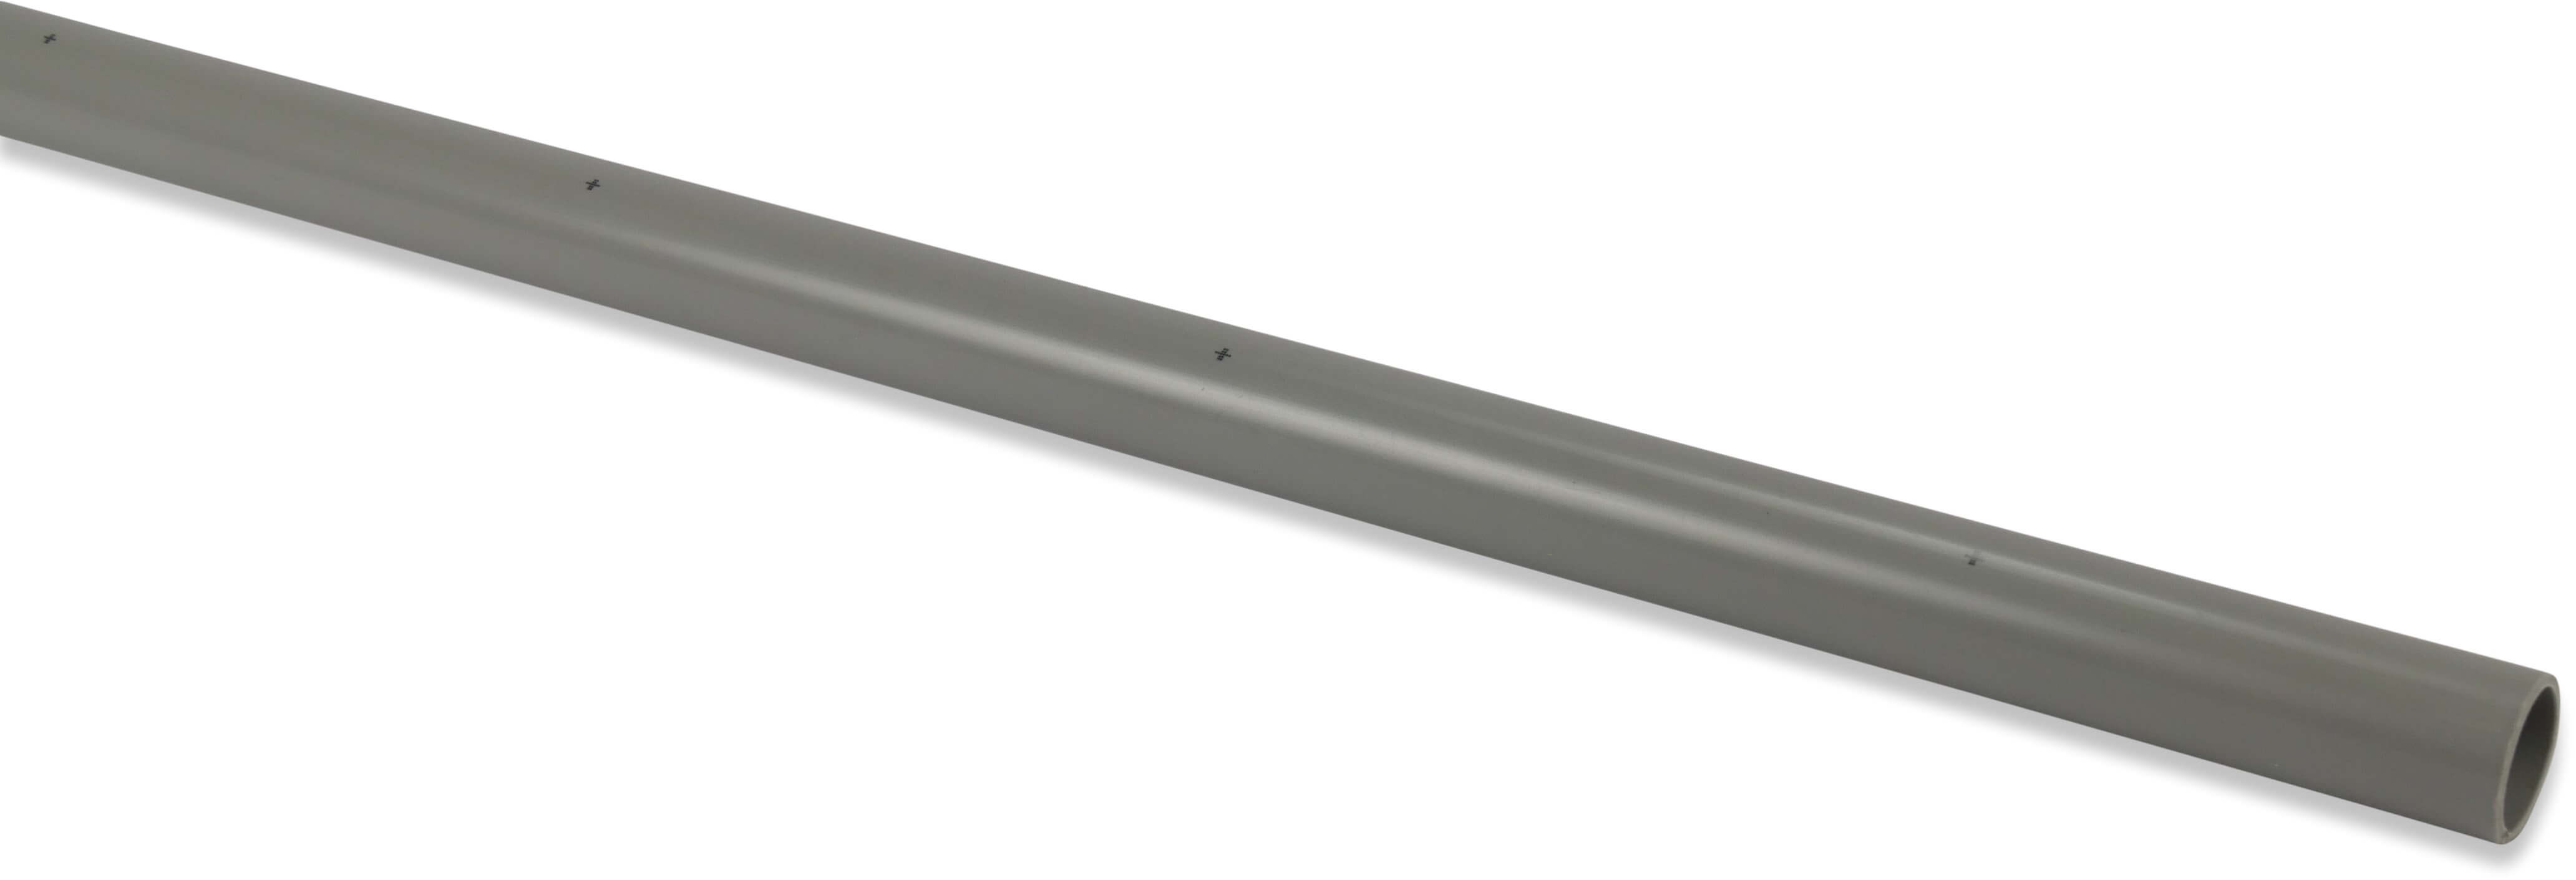 Cable protection pipe PVC-U 5/8" plain grey 4m